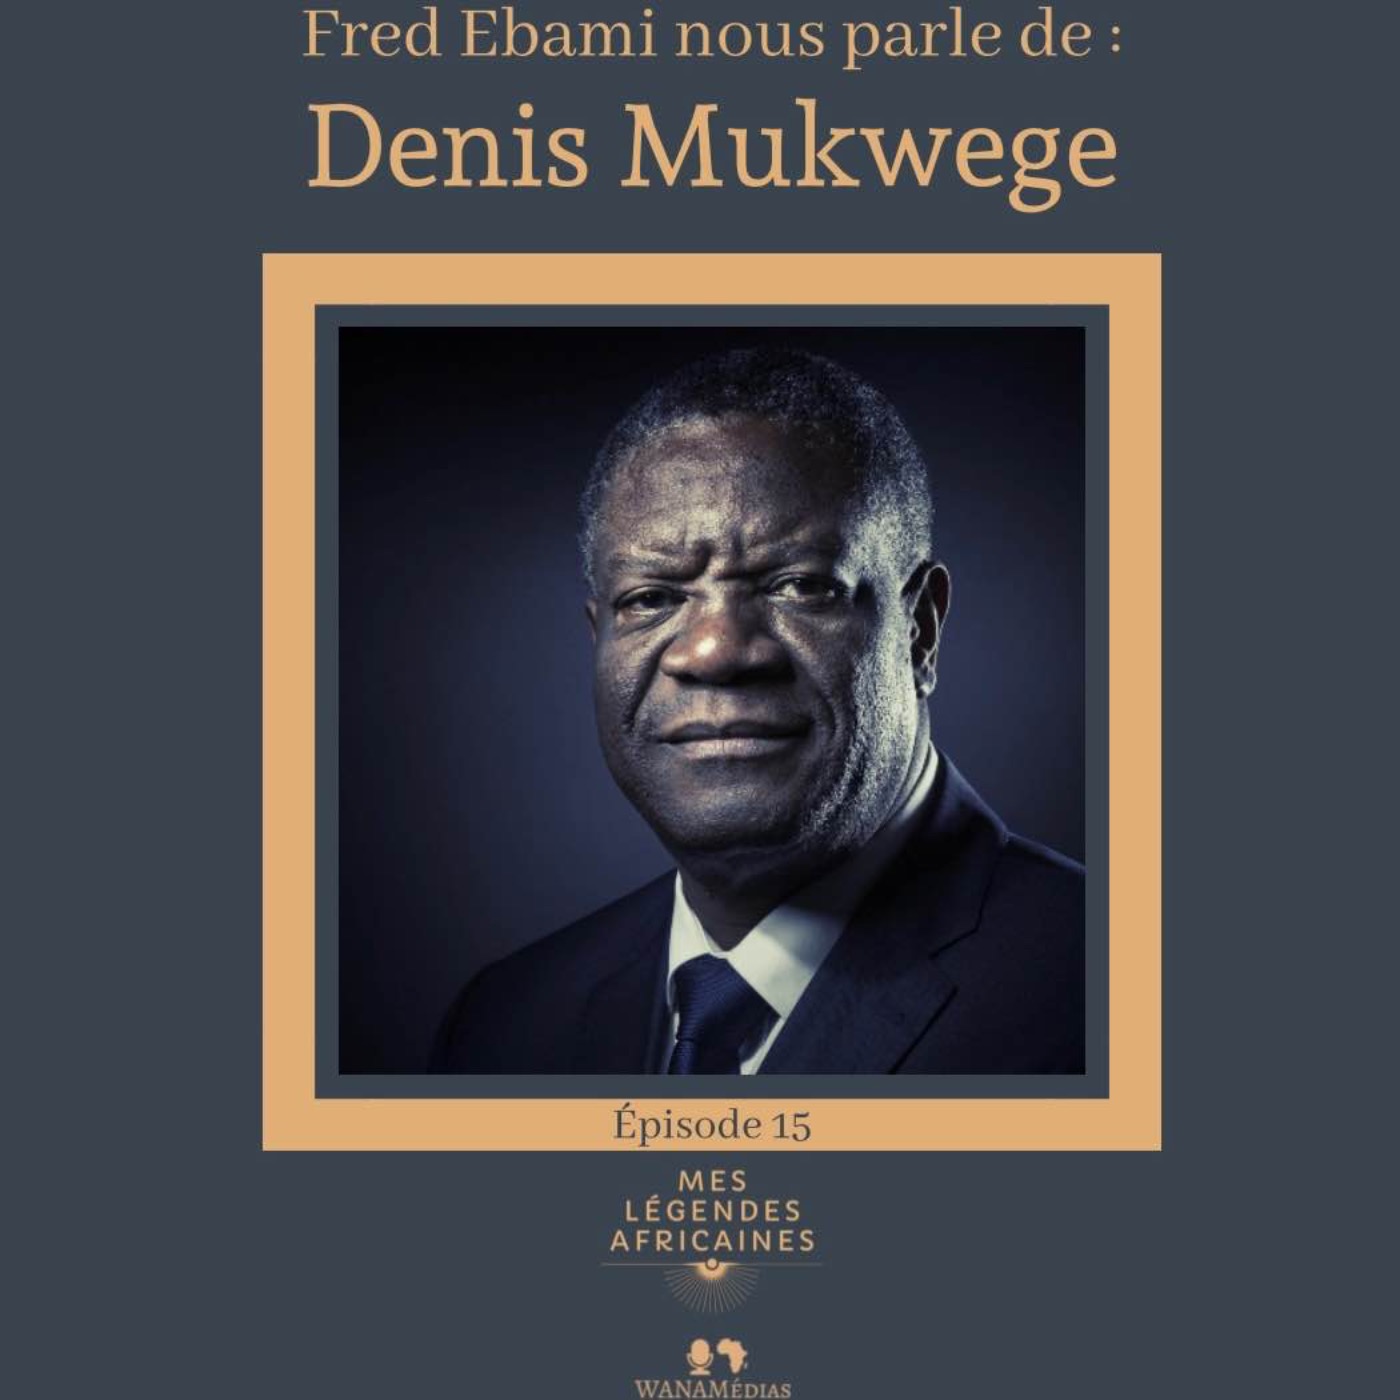 Fred Ebami nous parle de Denis Mukwege !